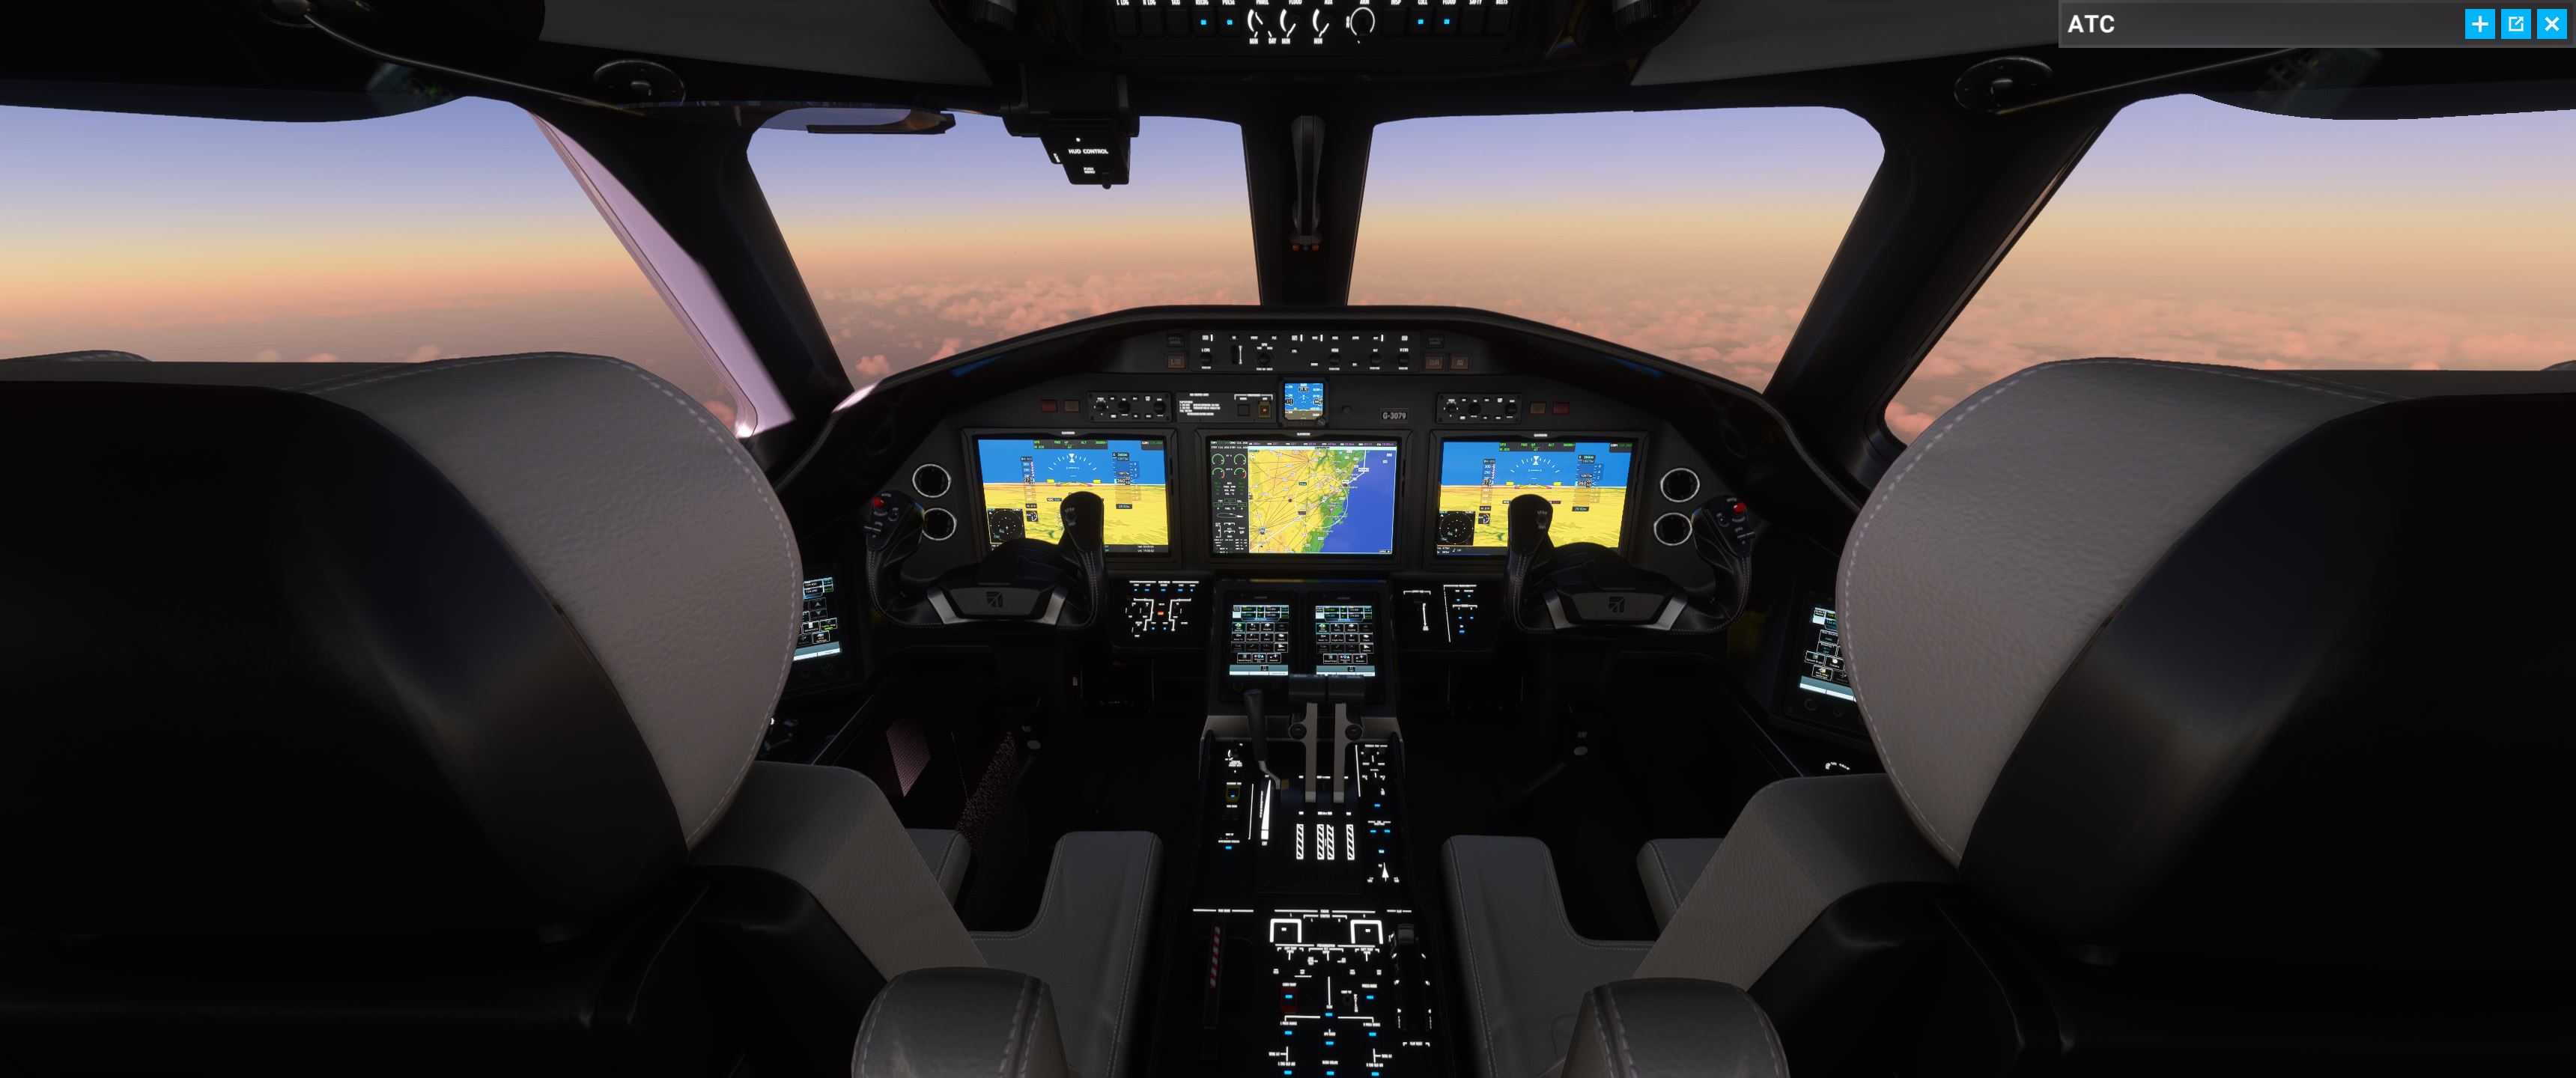 2022-09-18 21_55_47-Microsoft Flight Simulator - 1.26.5.0.jpg